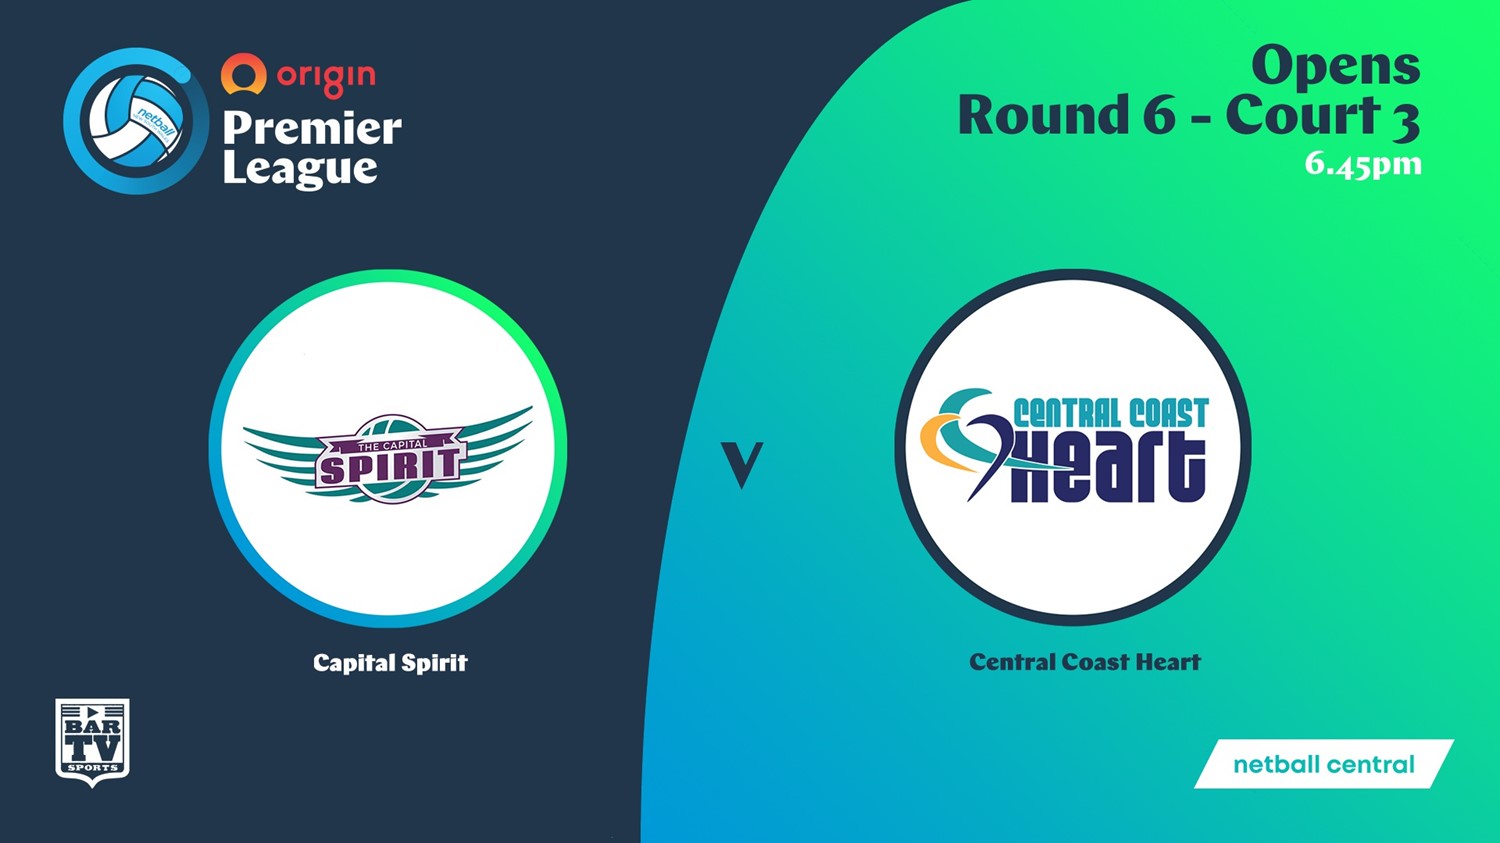 NSW Prem League Round 6 - Court 3 - Opens - Capital Spirit v Central Coast Heart Slate Image